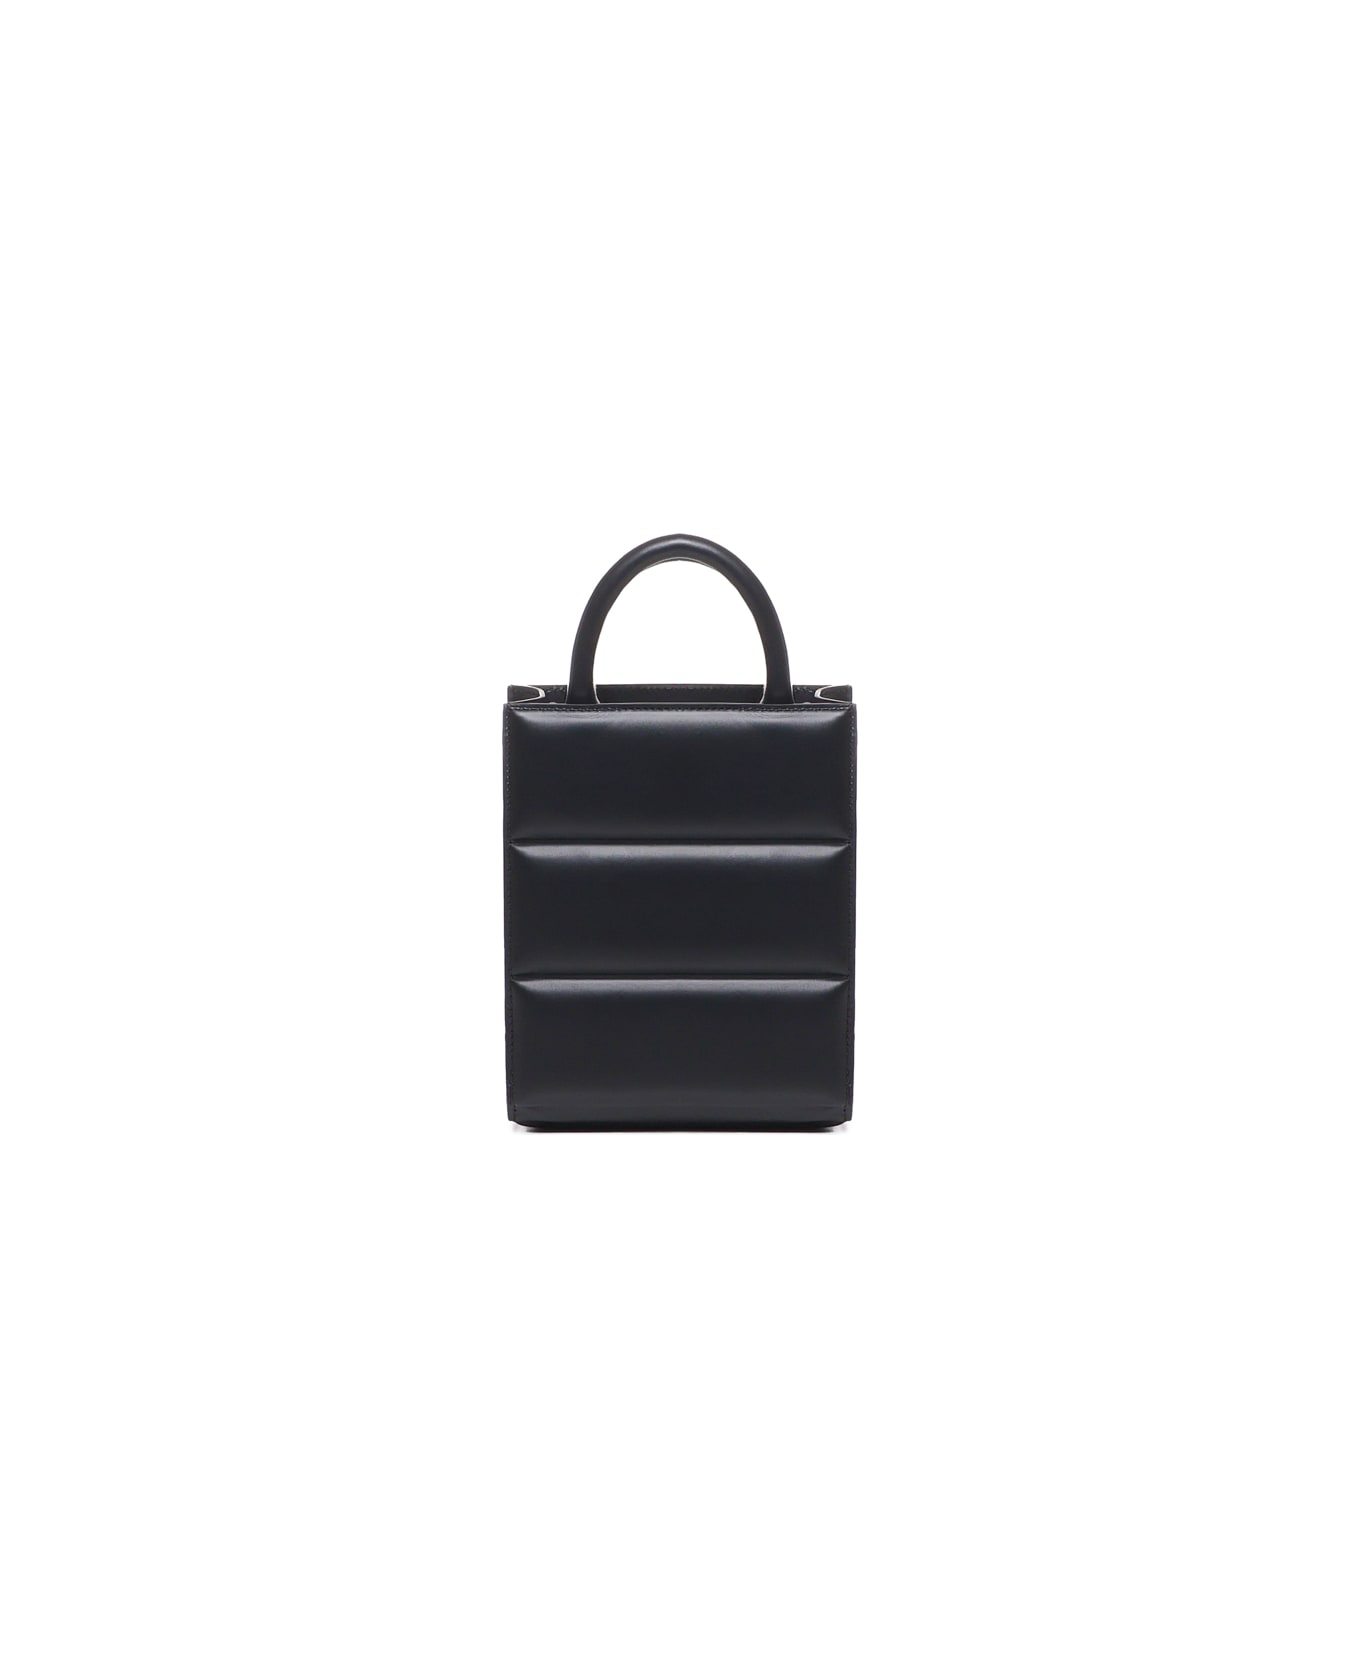 Moncler Leather Doudoune Mini Tote Bag - Black バッグ